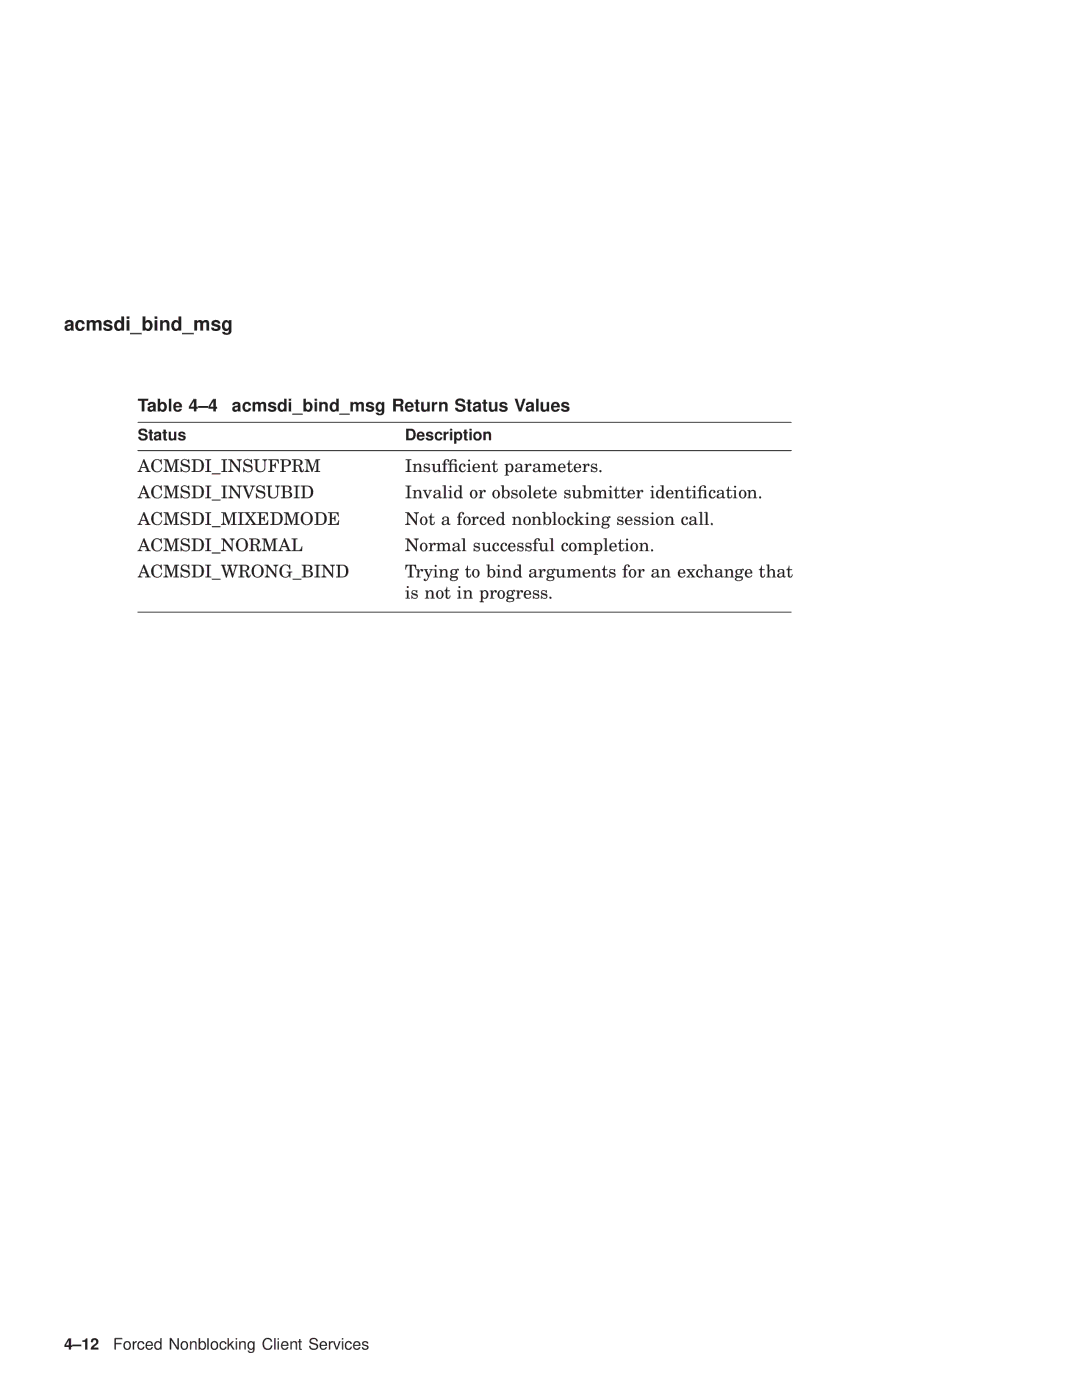 Compaq AAPVNFGTE manual Acmsdibindmsg Return Status Values, Status Description 